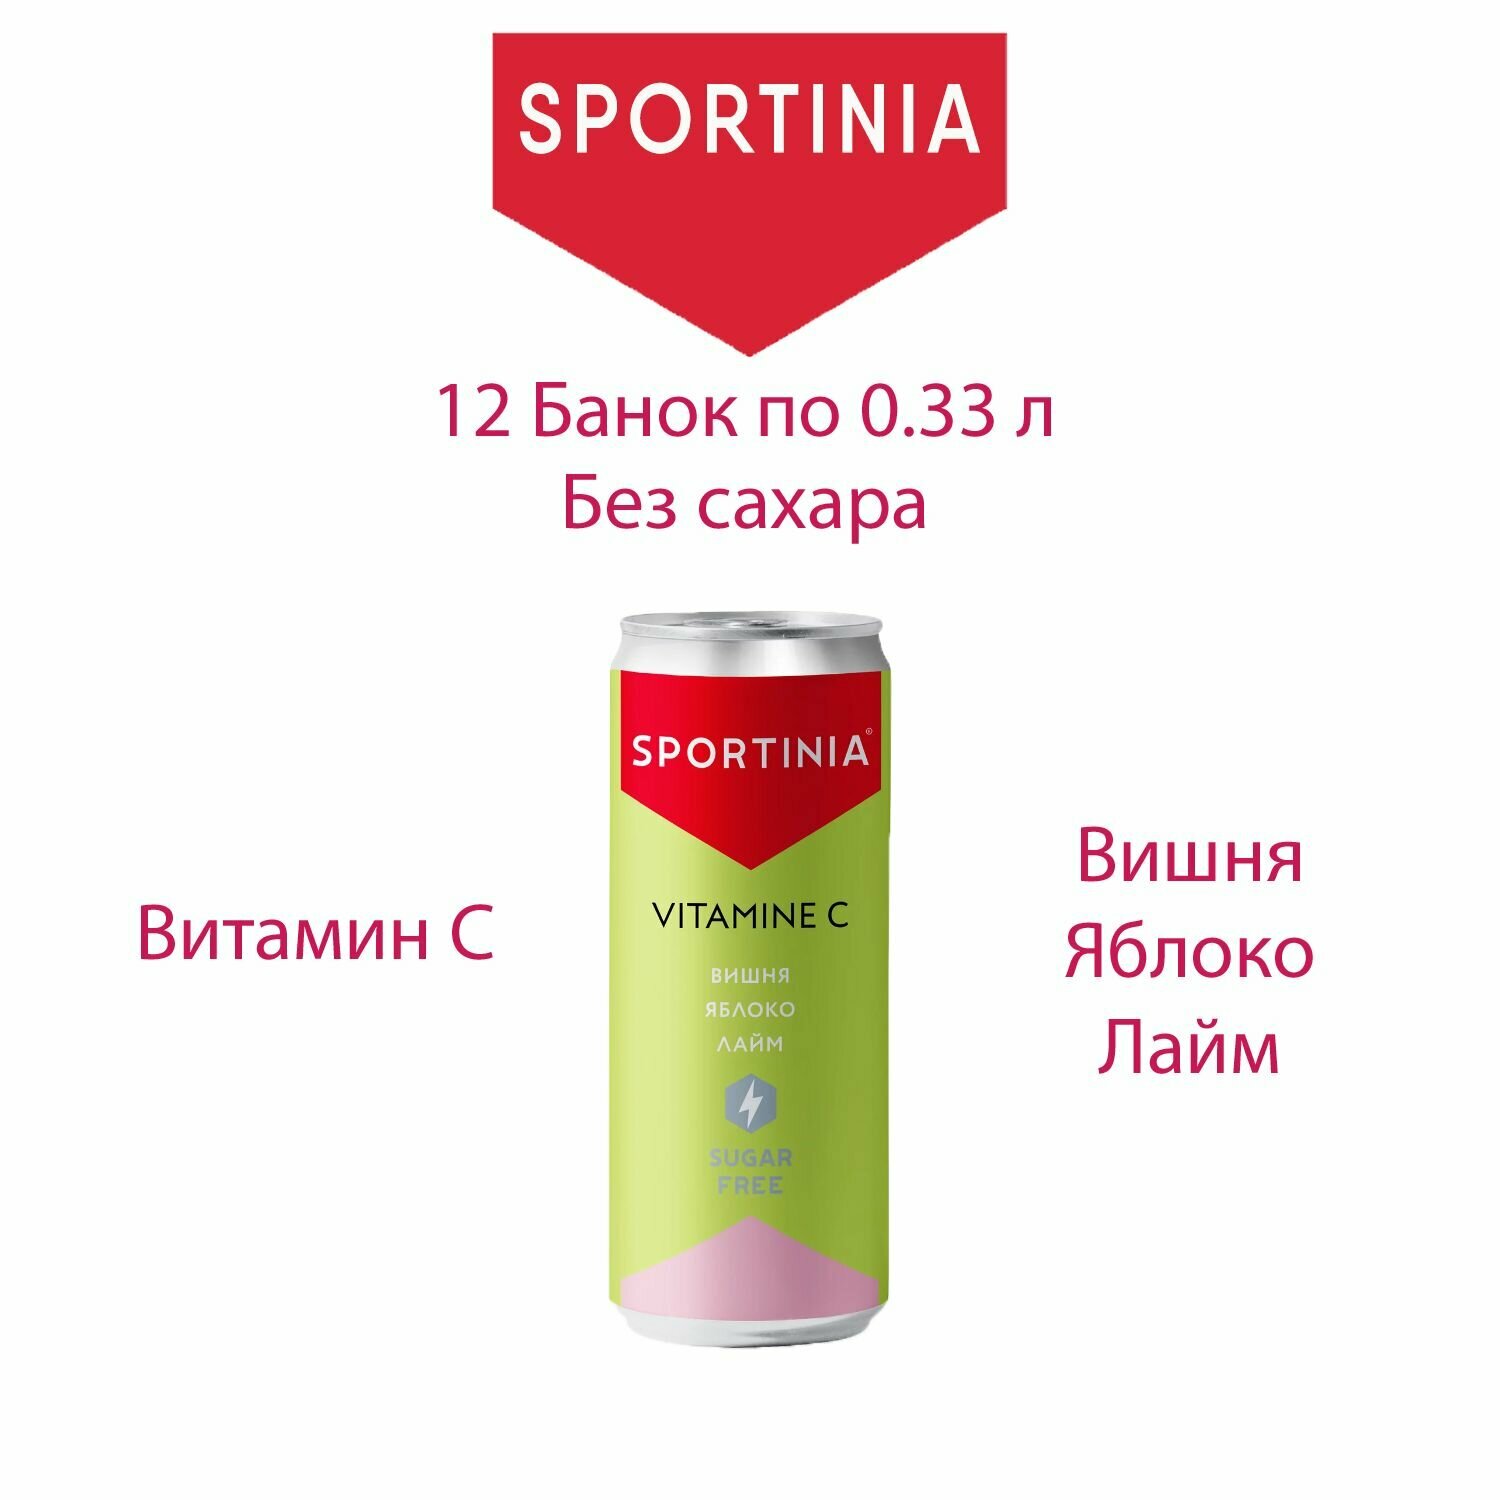 Vitamine C Sportinia - витаминный напиток без сахара 12 банок по 0.33 л.